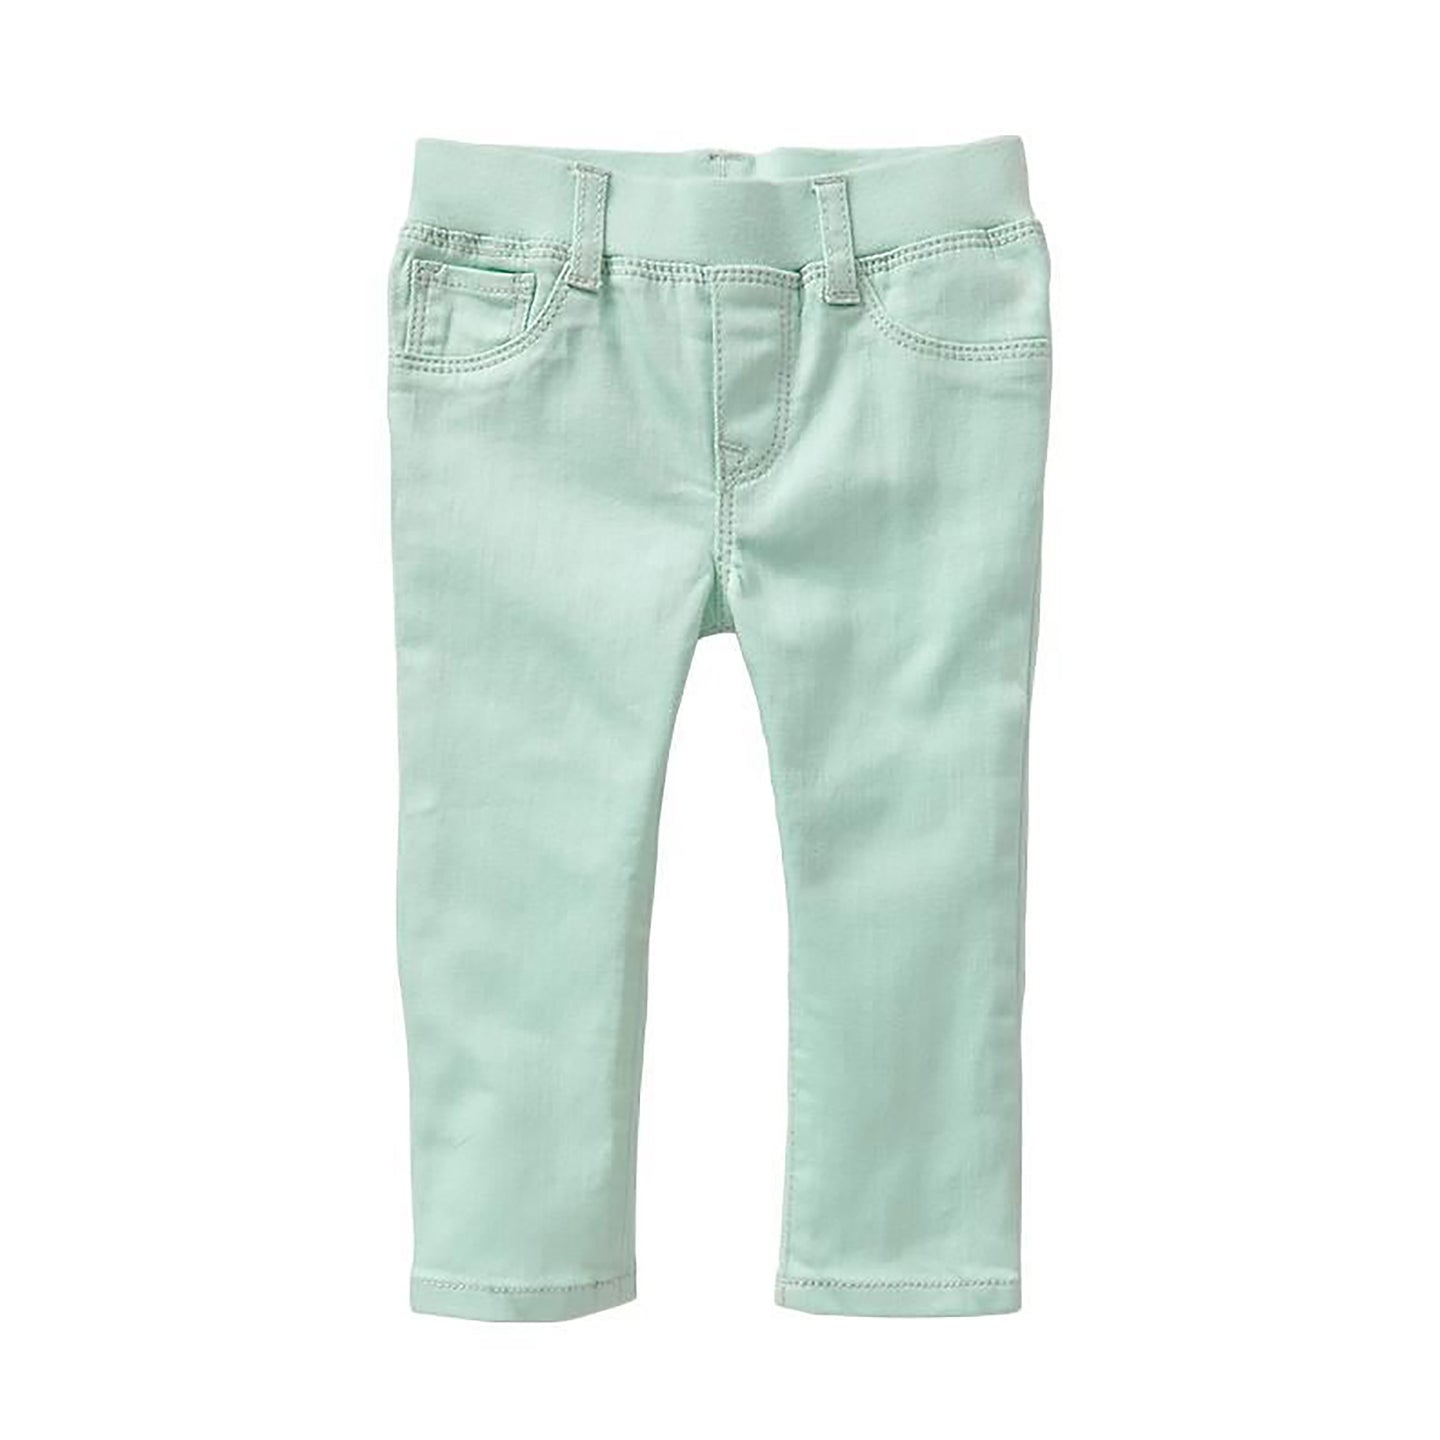 [12-18m] Baby Gap Turquoise Denim Leggings